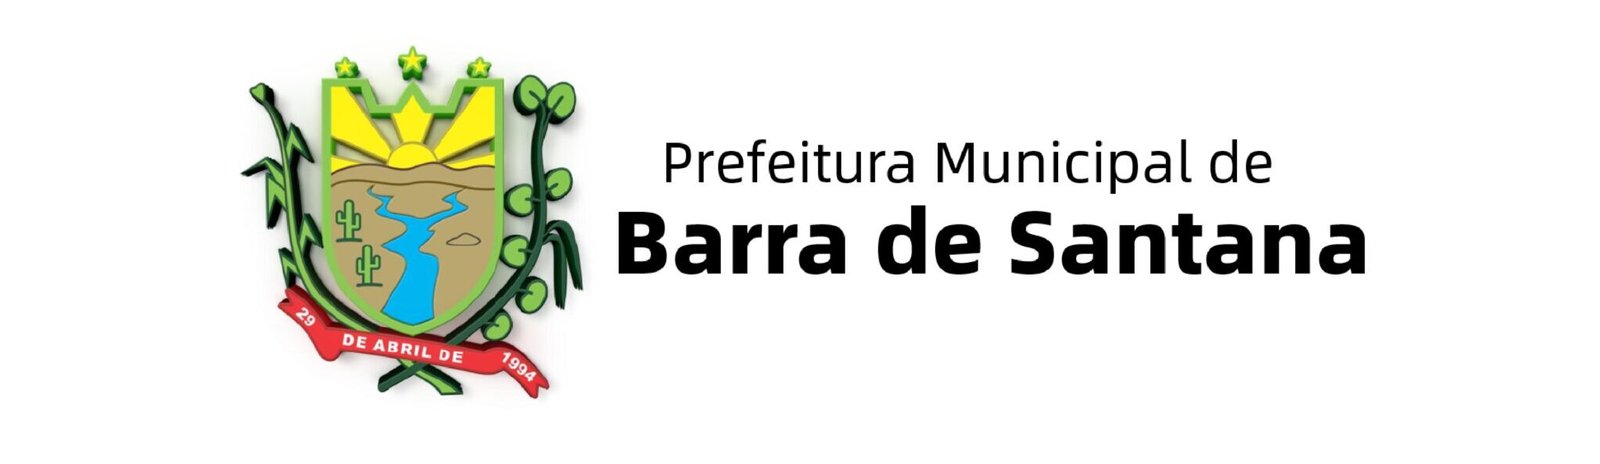 Barra de Santana- Prefeitura Municipal